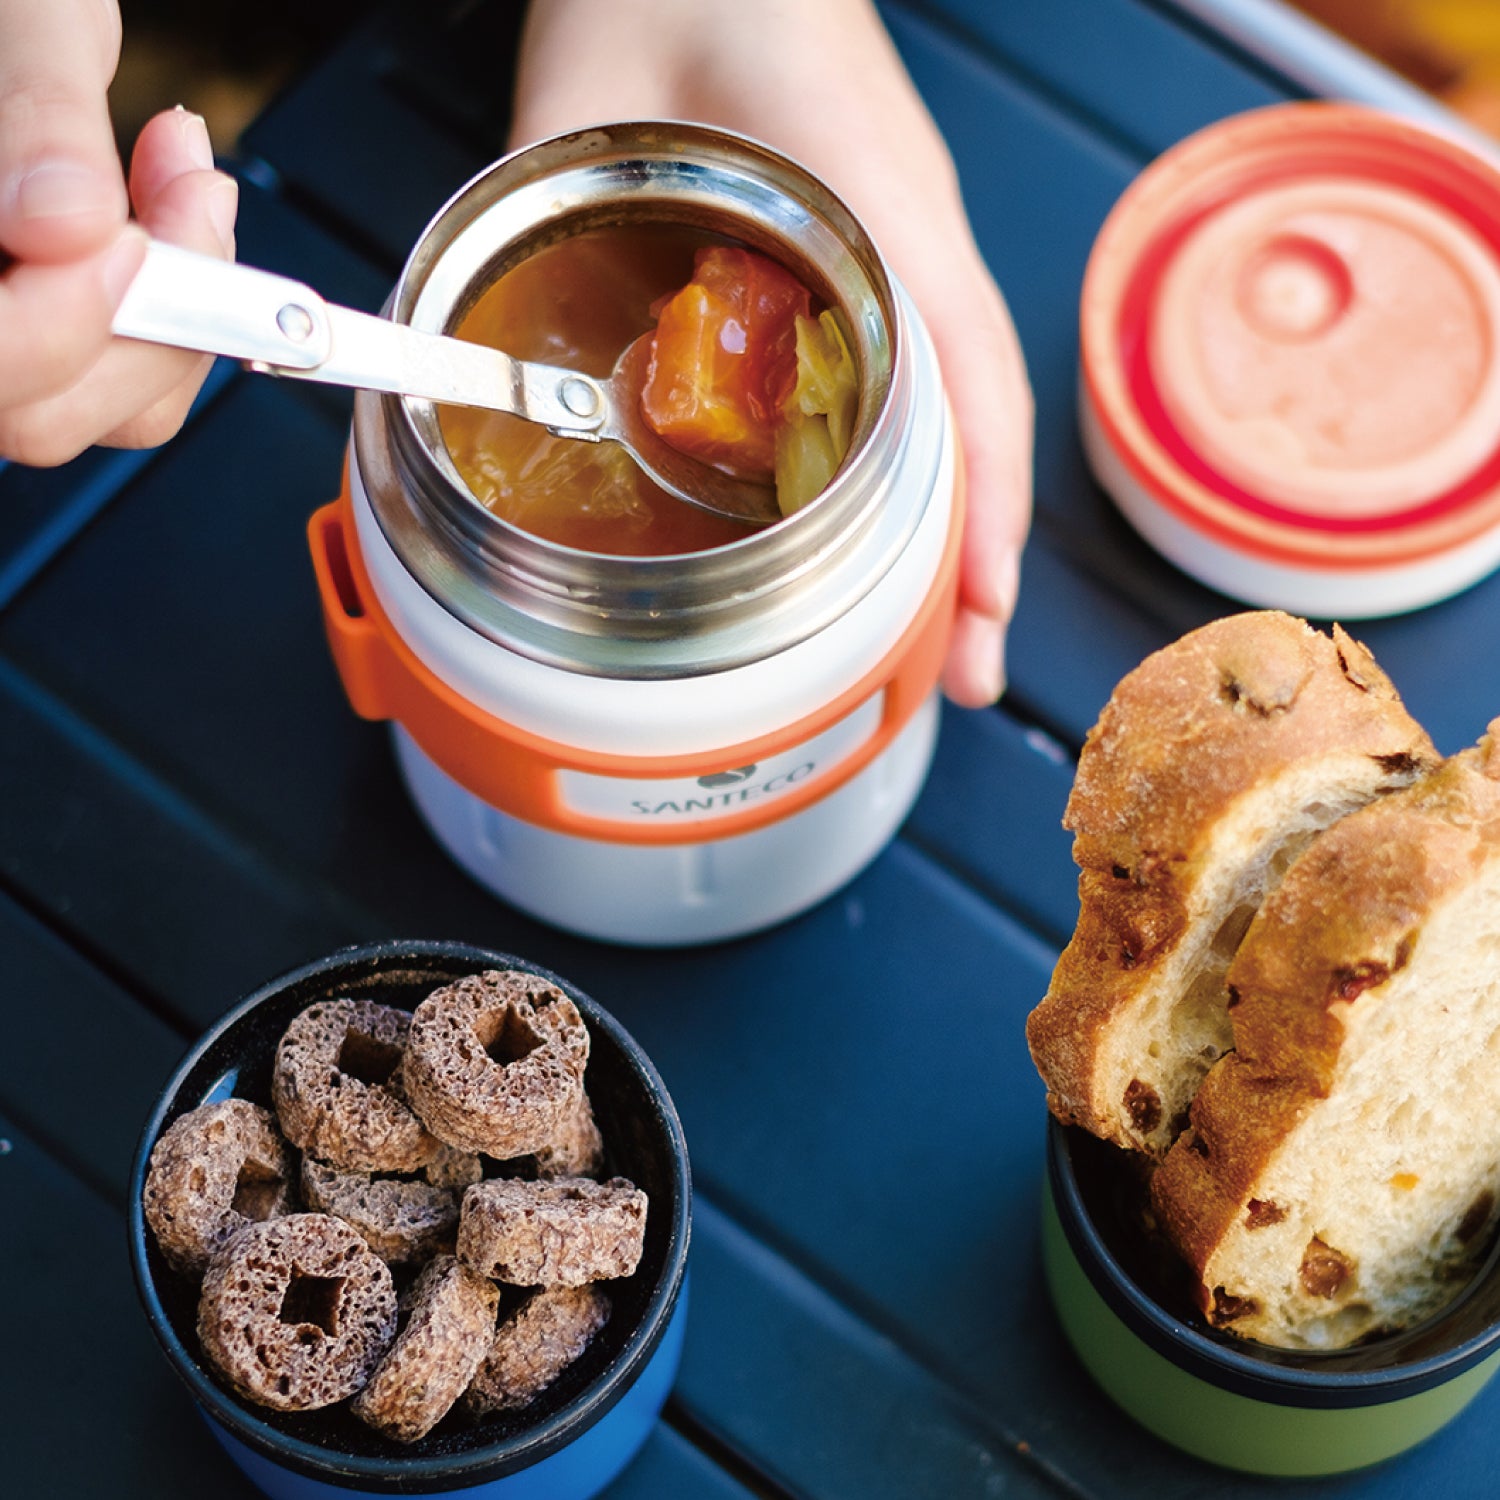 SANTECO Koge Thermal Food Jar With Spoon, 17 oz, Stainless Steel, Vacuum Insulated